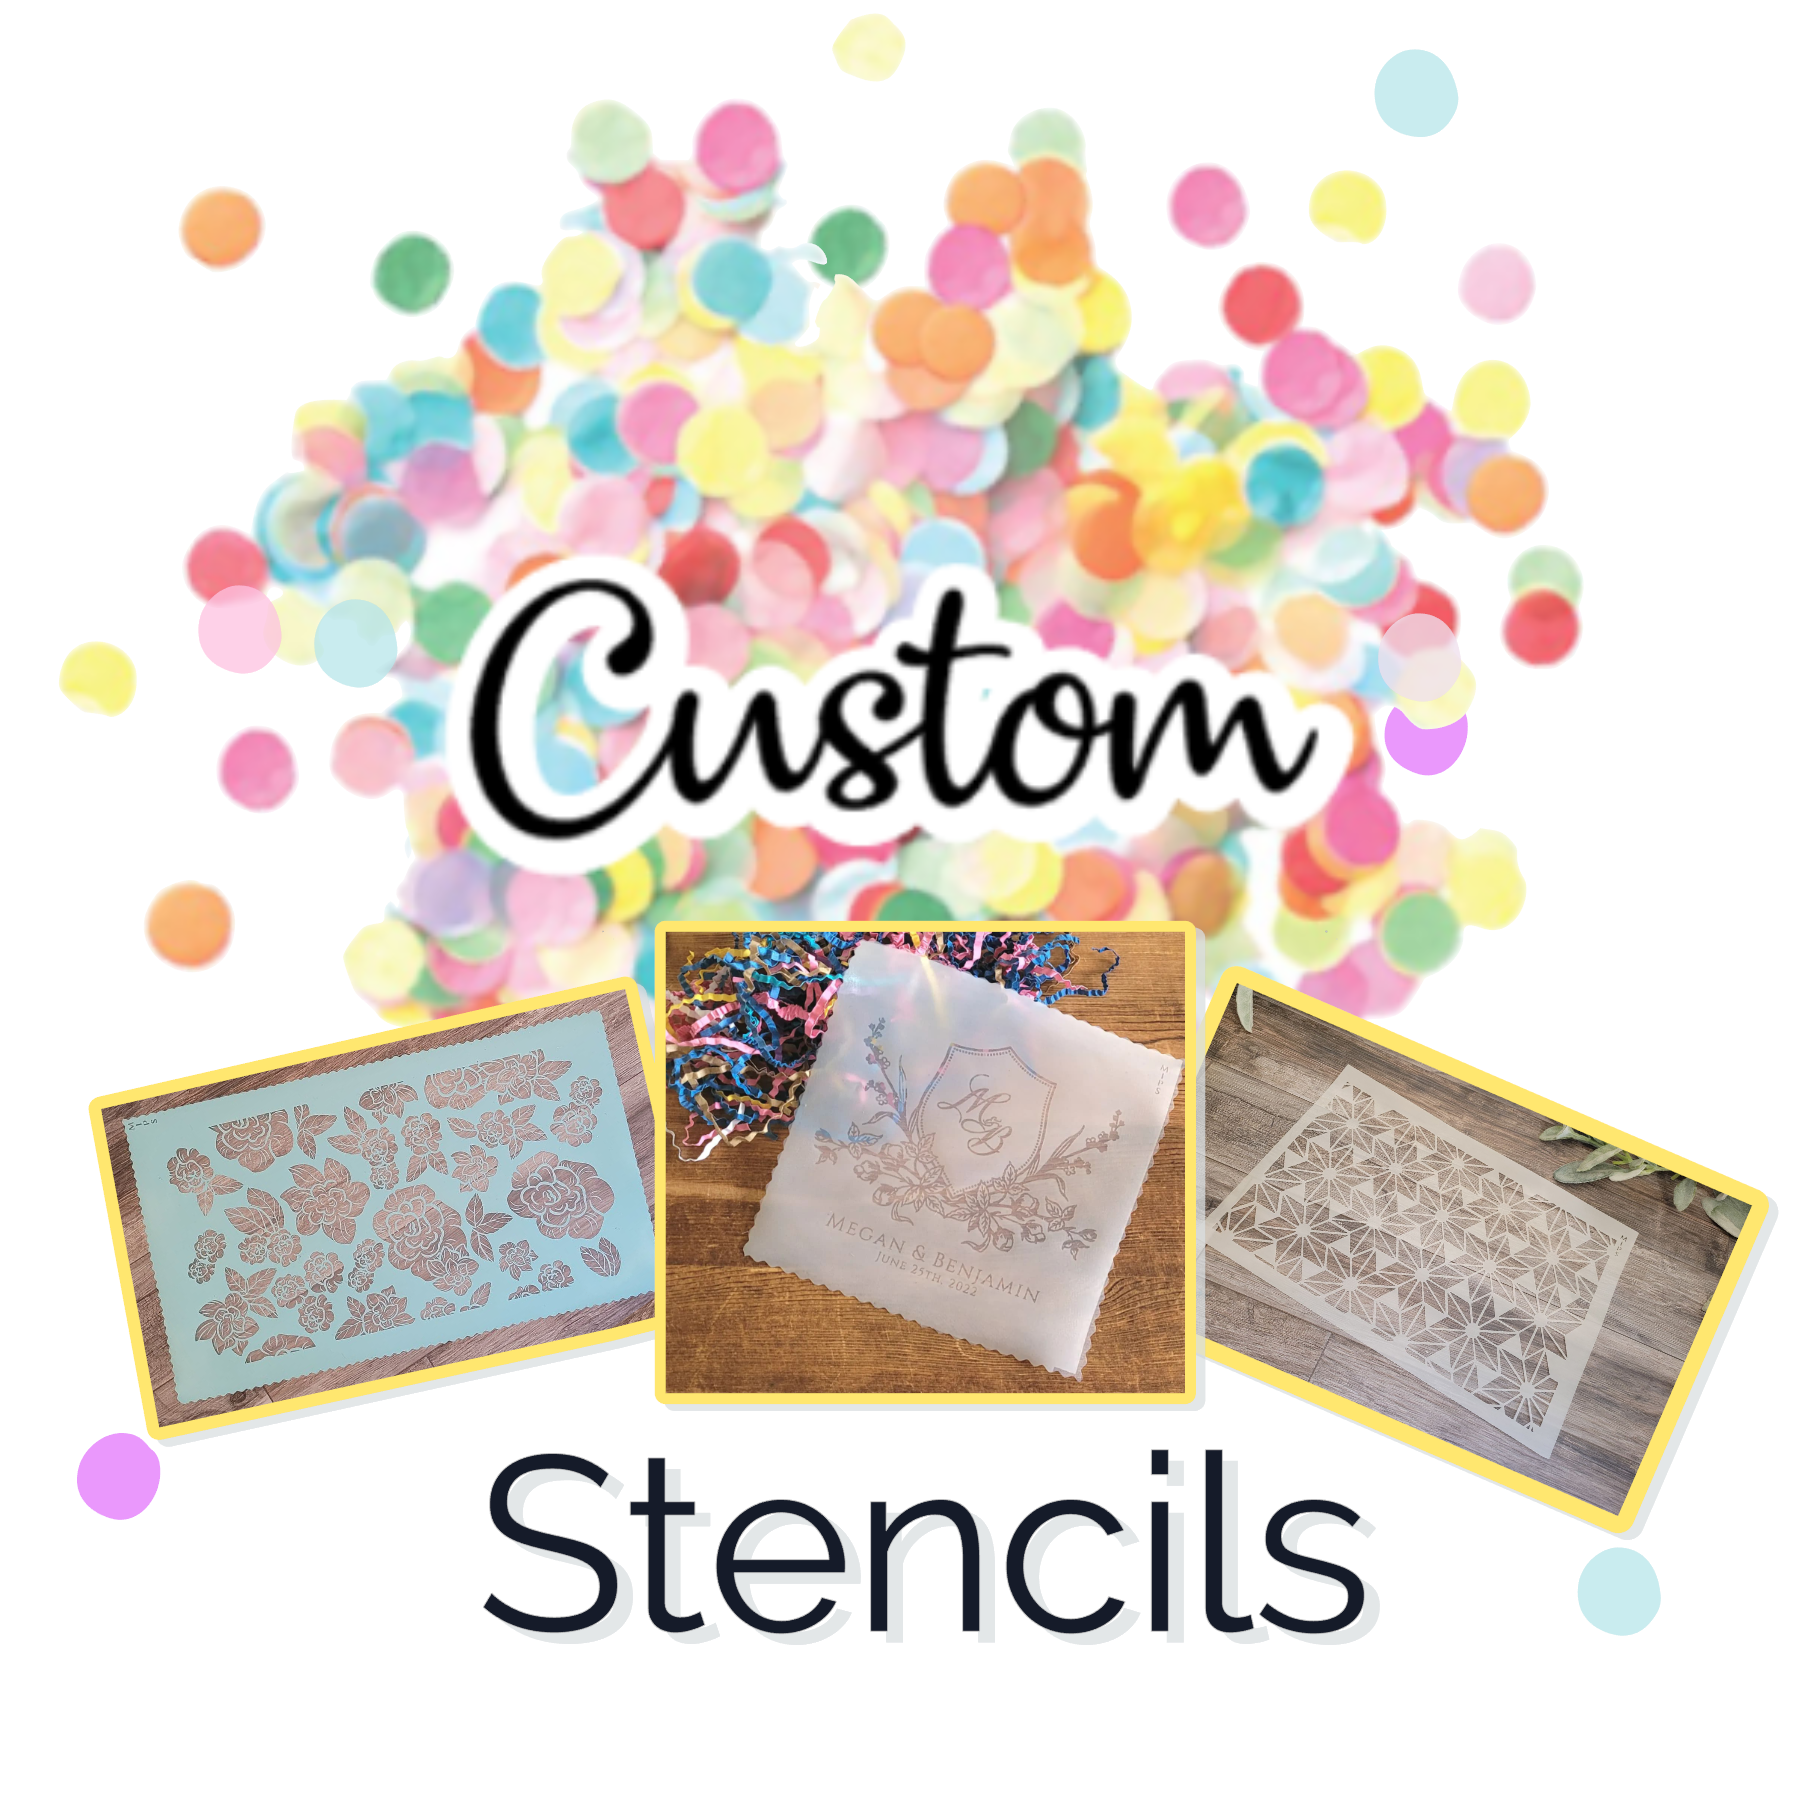 Custom Logo Stencils & Custom Graphic Stencils